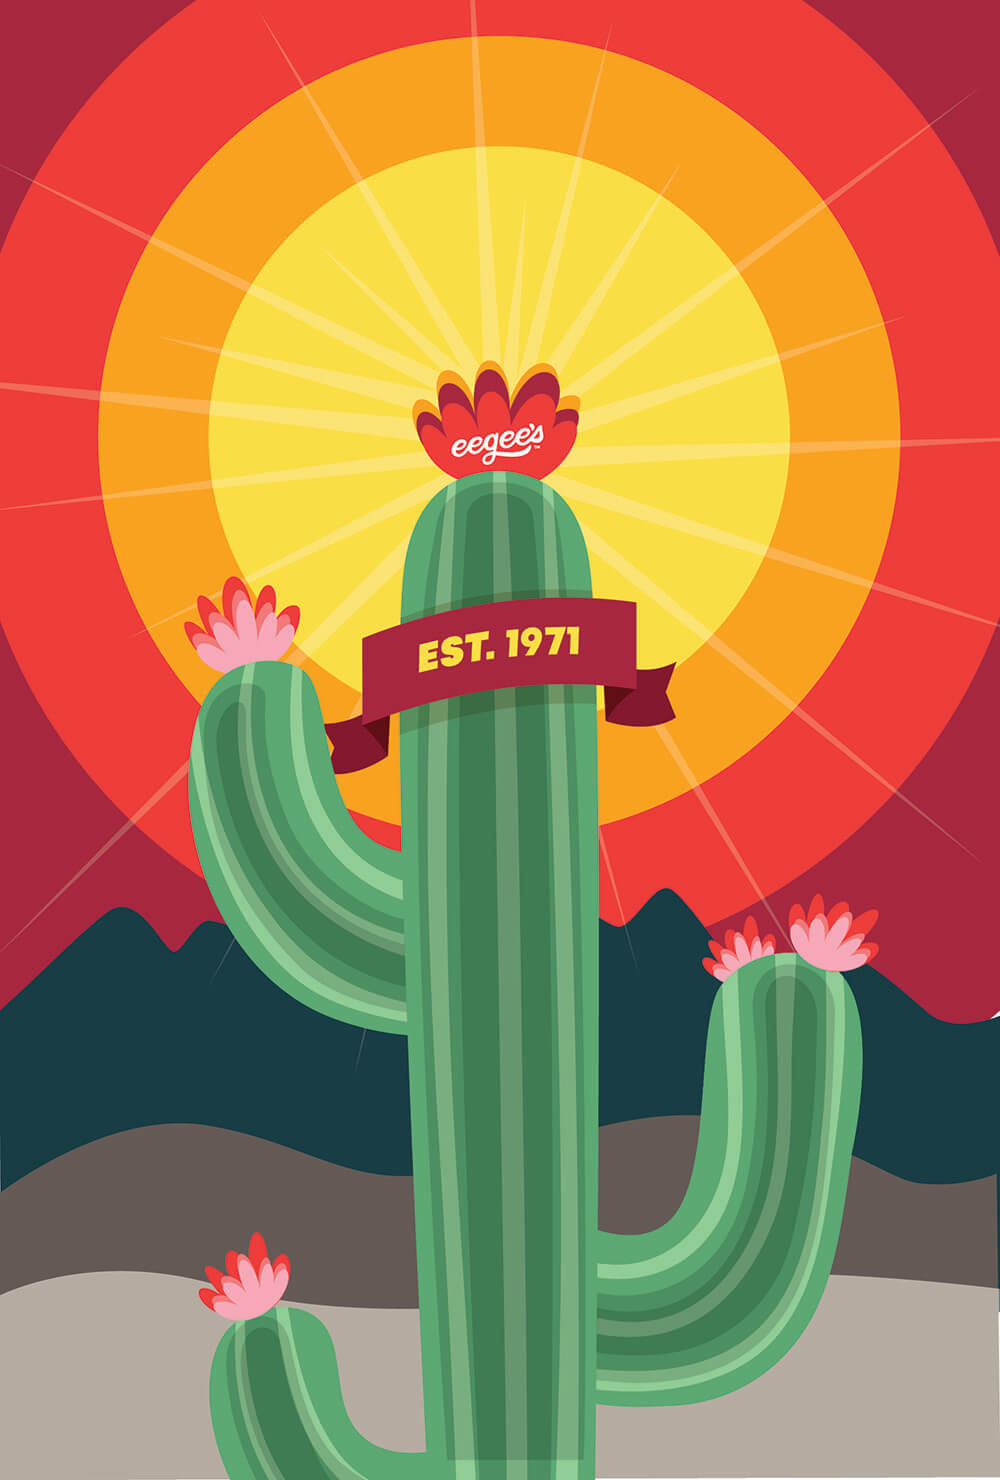 Cartoon cactus with eegee's logo